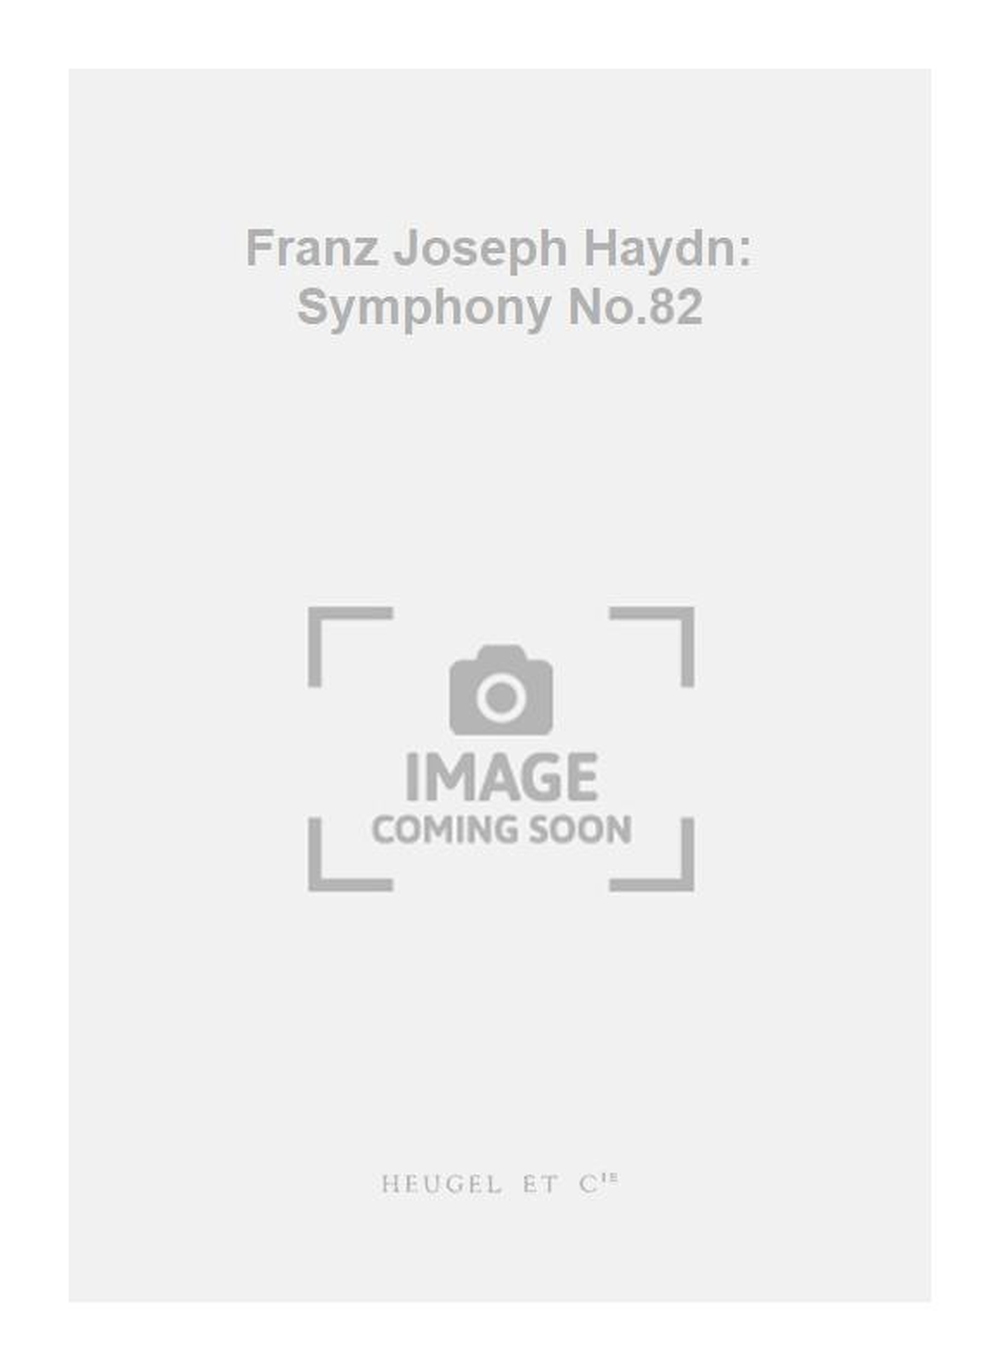 Franz Joseph Haydn: Franz Joseph Haydn: Symphony No.82